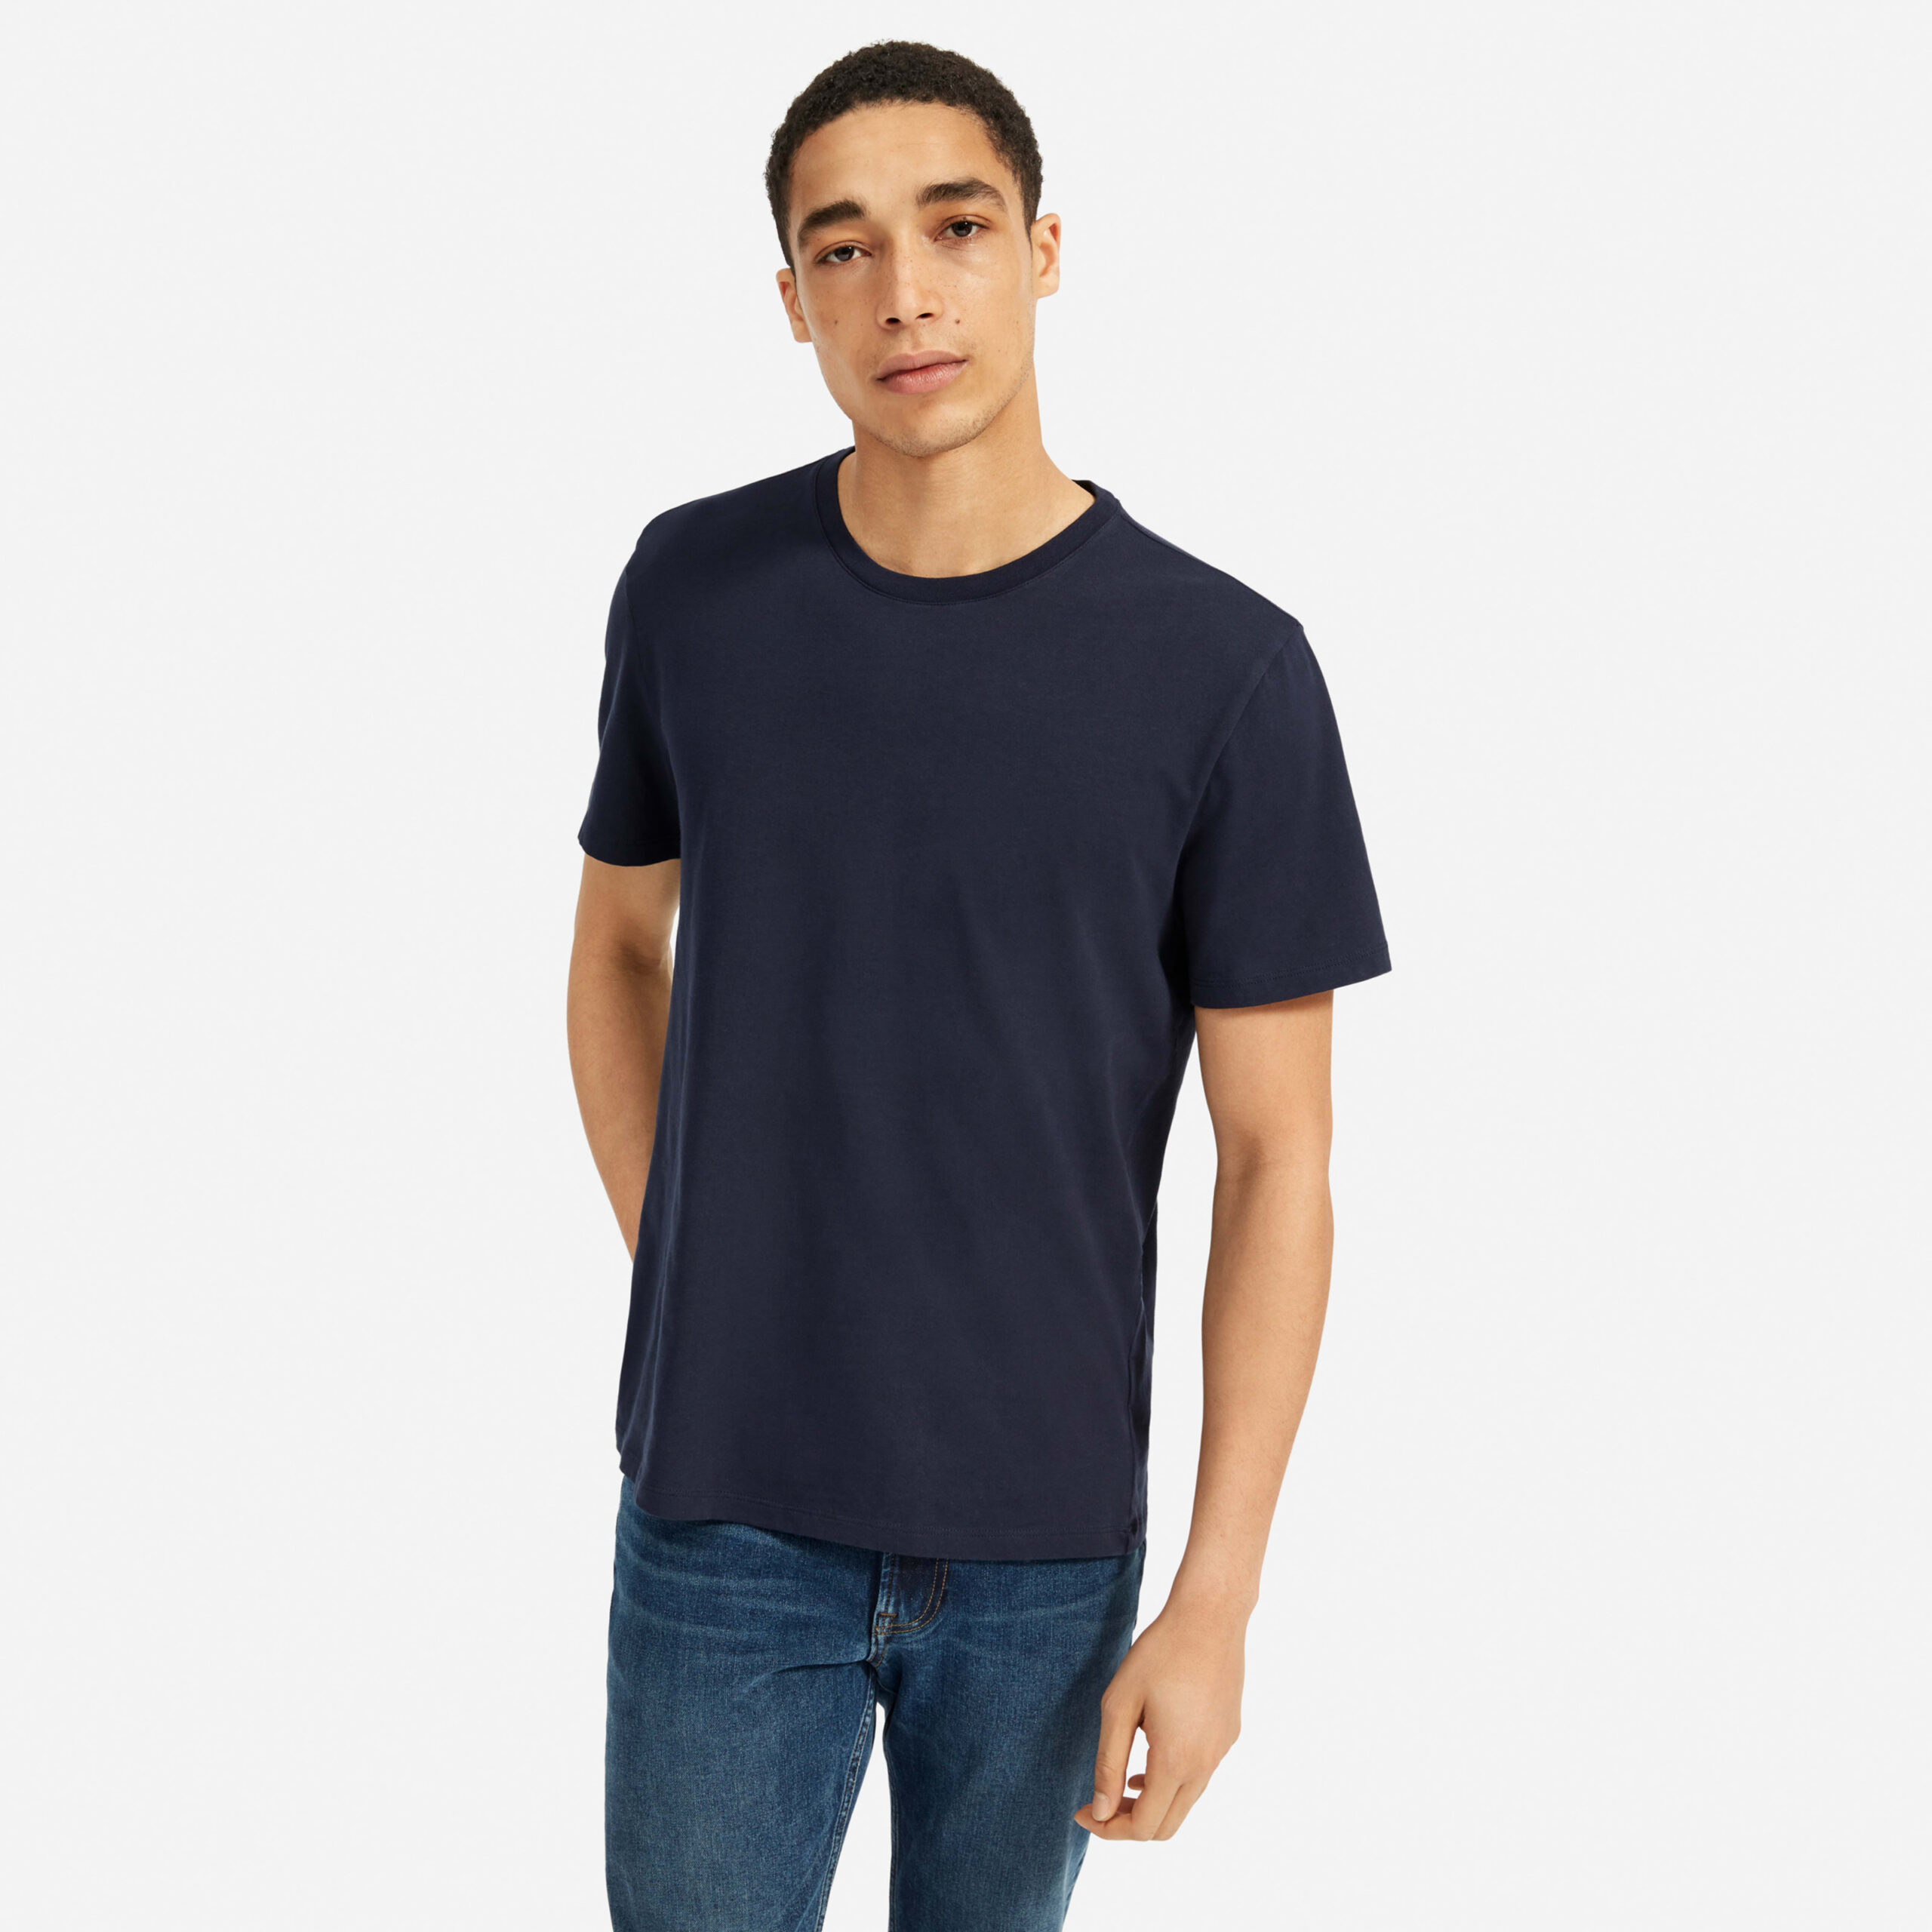 Men&#8217;s Organic Cotton Crew | Uniform T-Shirt by Everlane in Navy